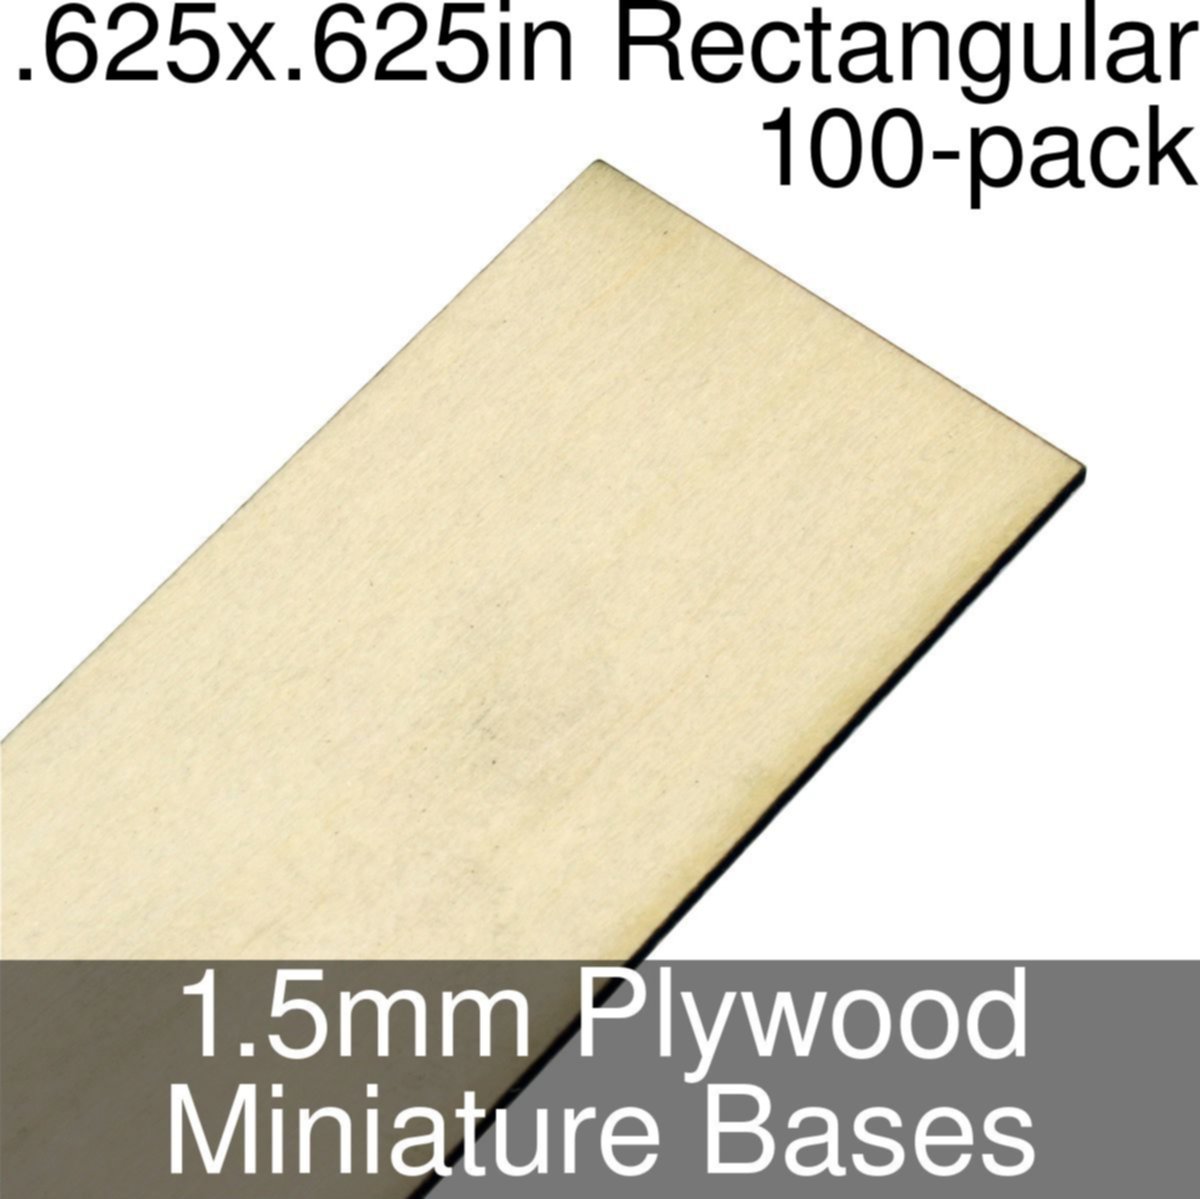 .625x0.625-inch rectangular miniature bases